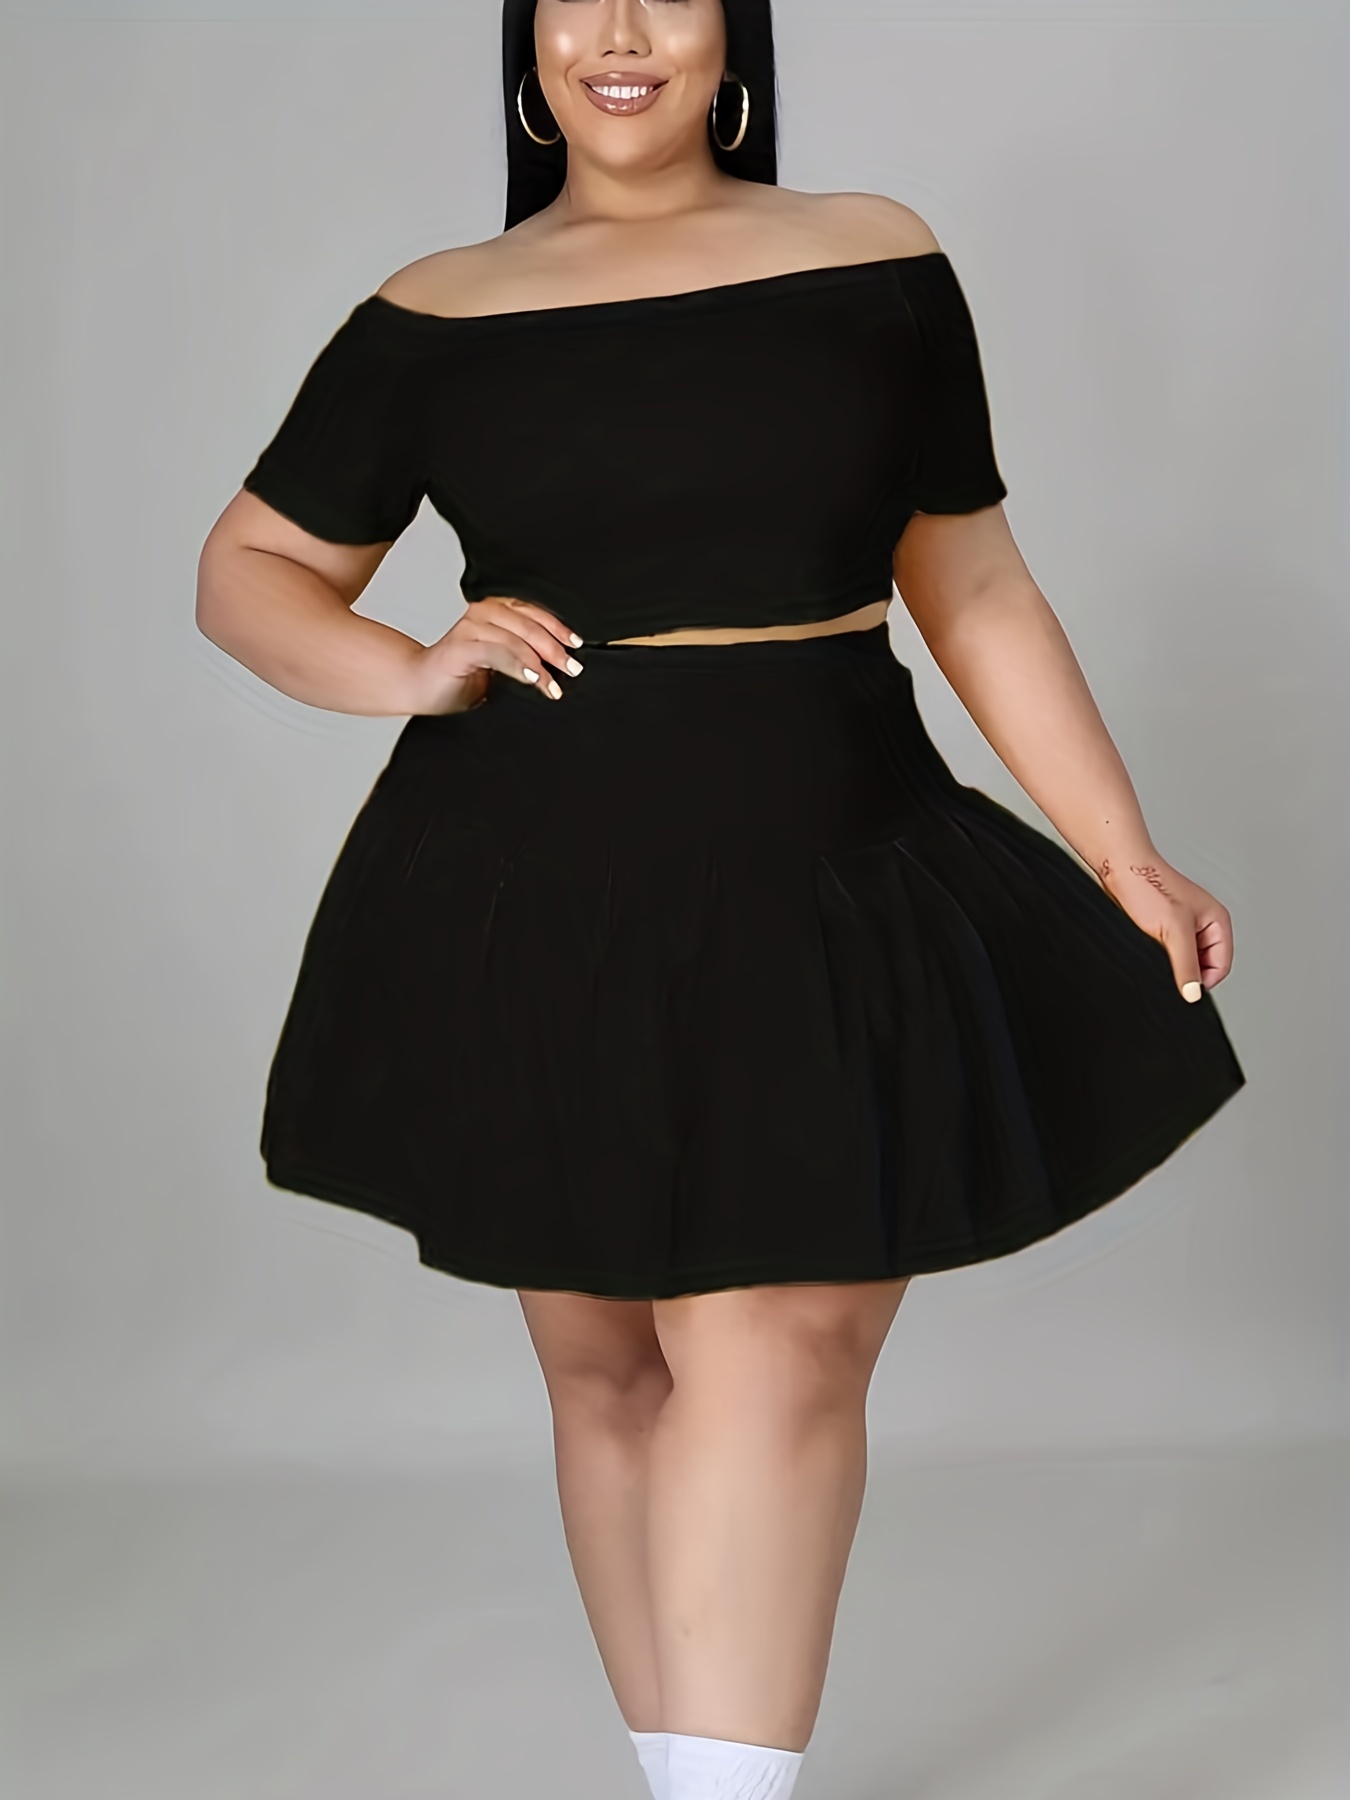 Stylish and Trendy Plus Size Tops, Maya Skirt